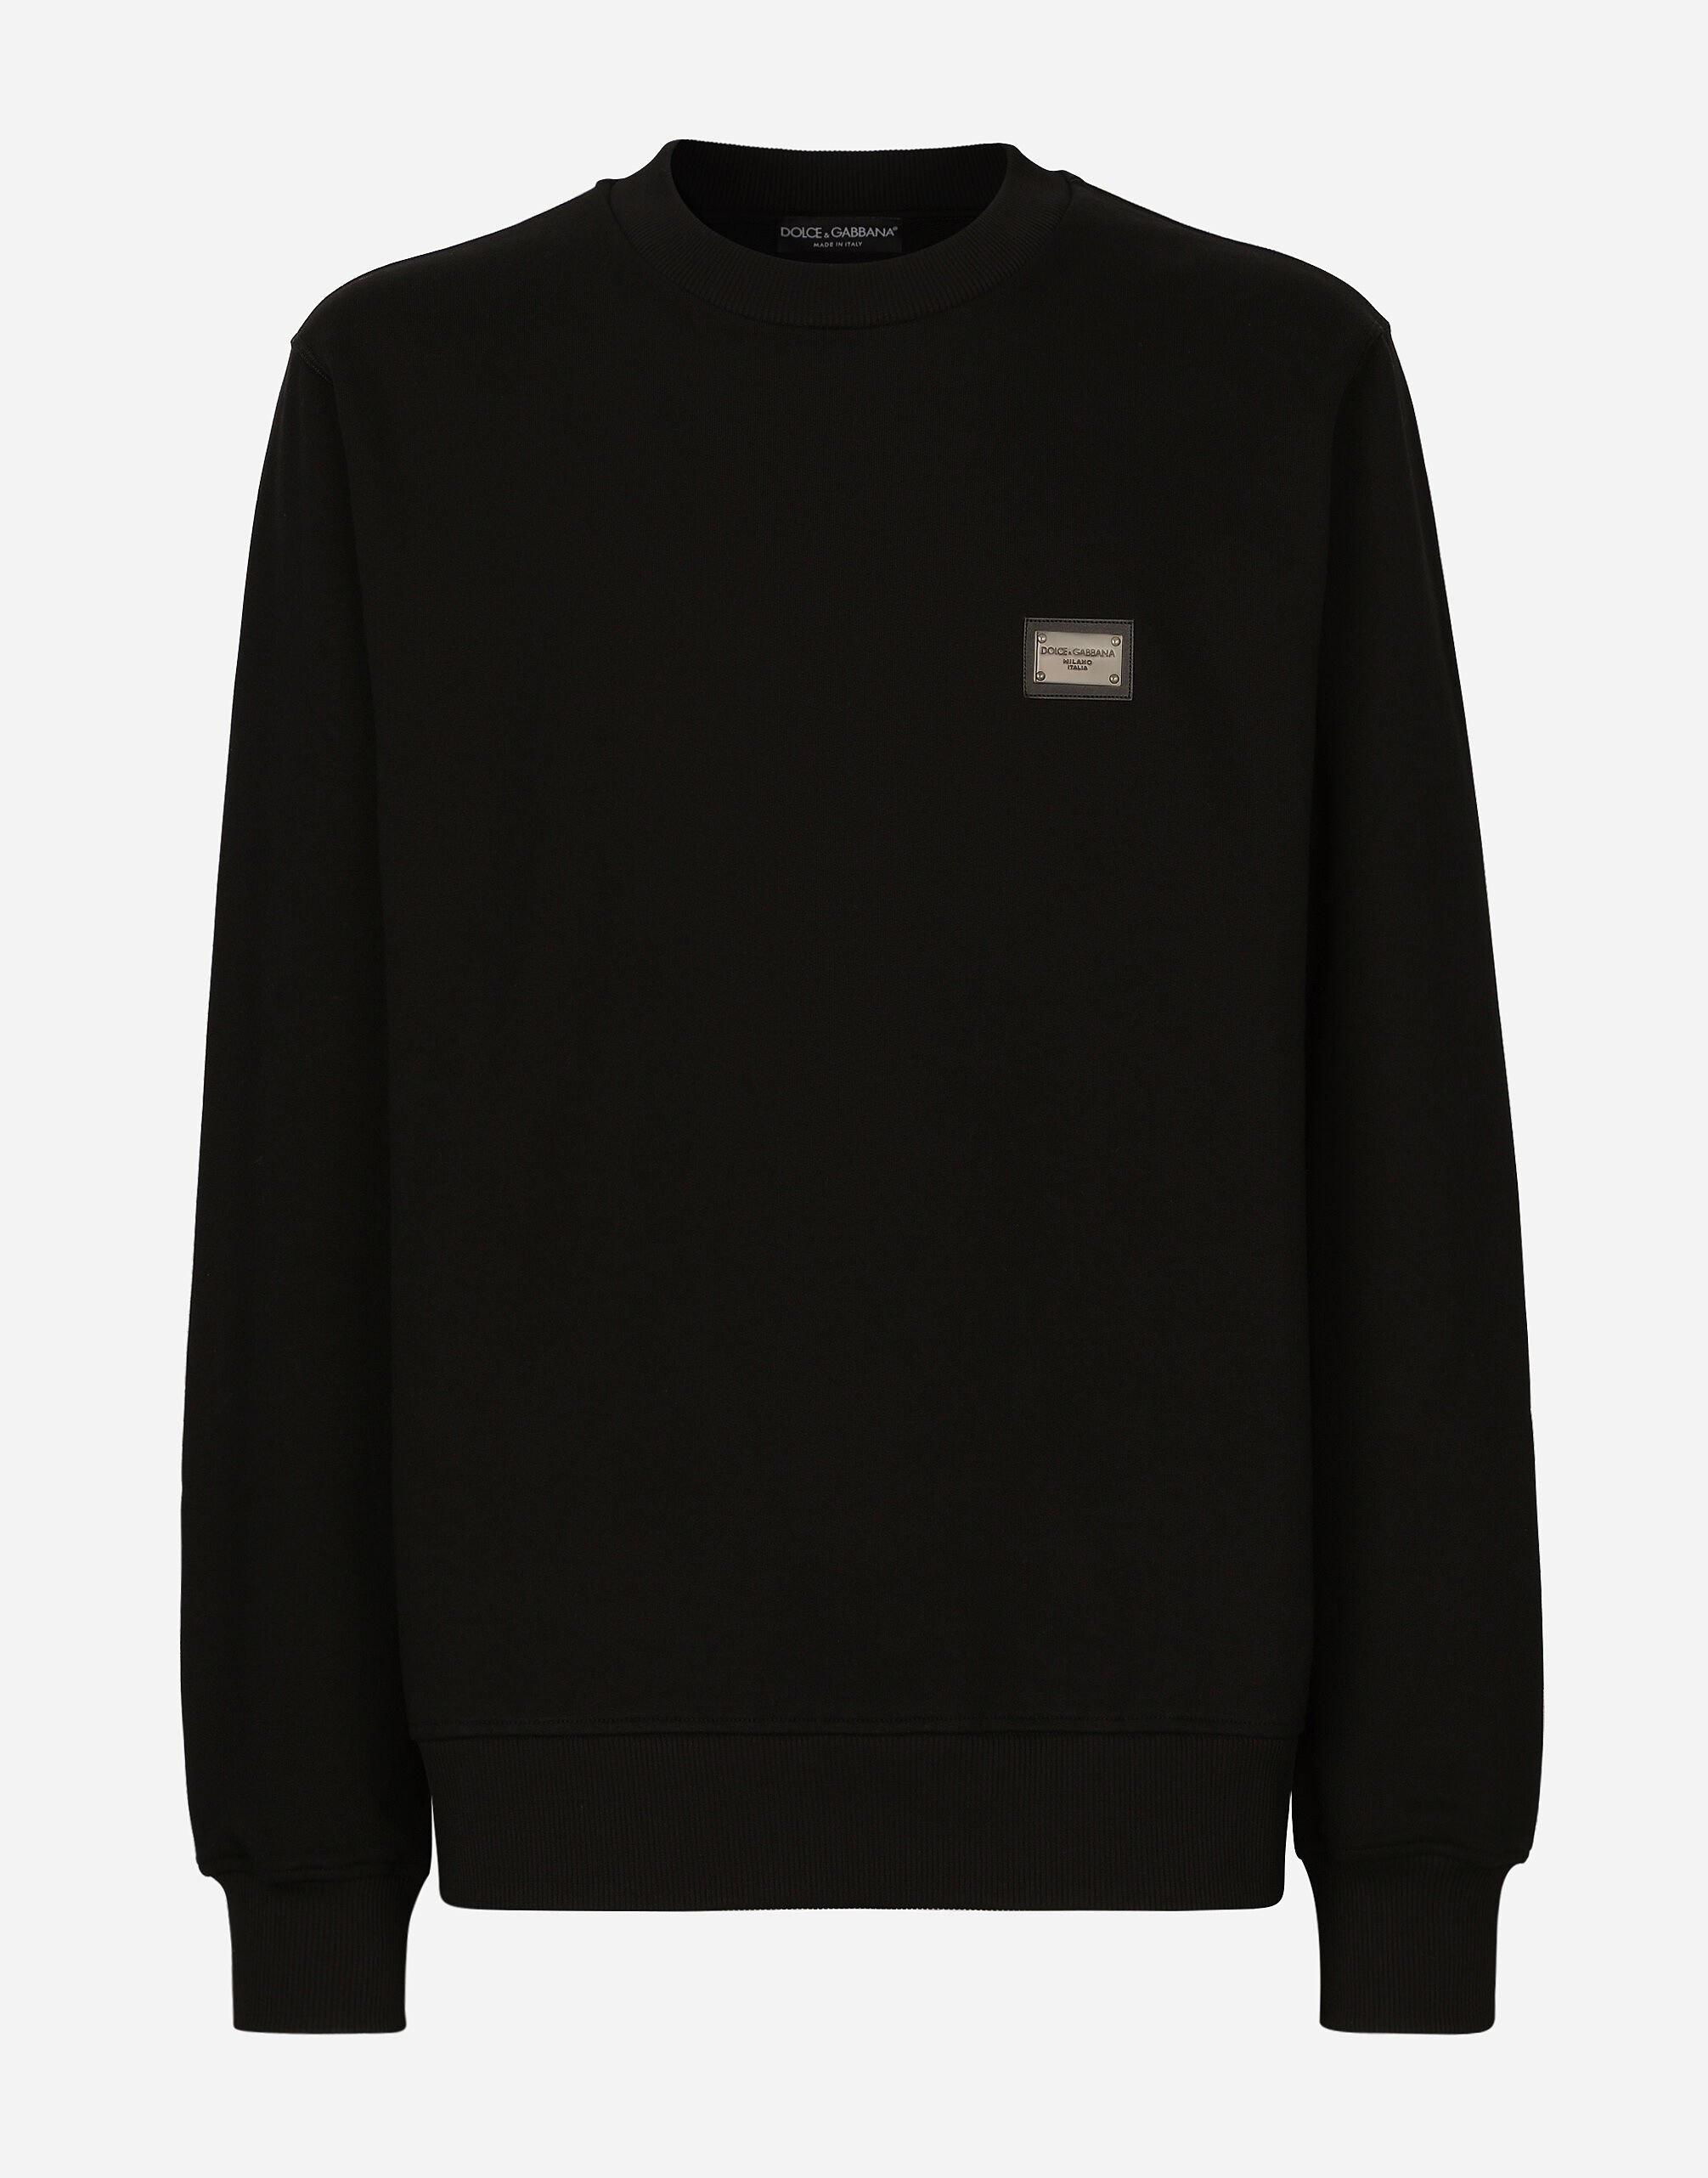 Dolce & Gabbana Jersey sweatshirt with branded tag Print G9AQVTHI7X6